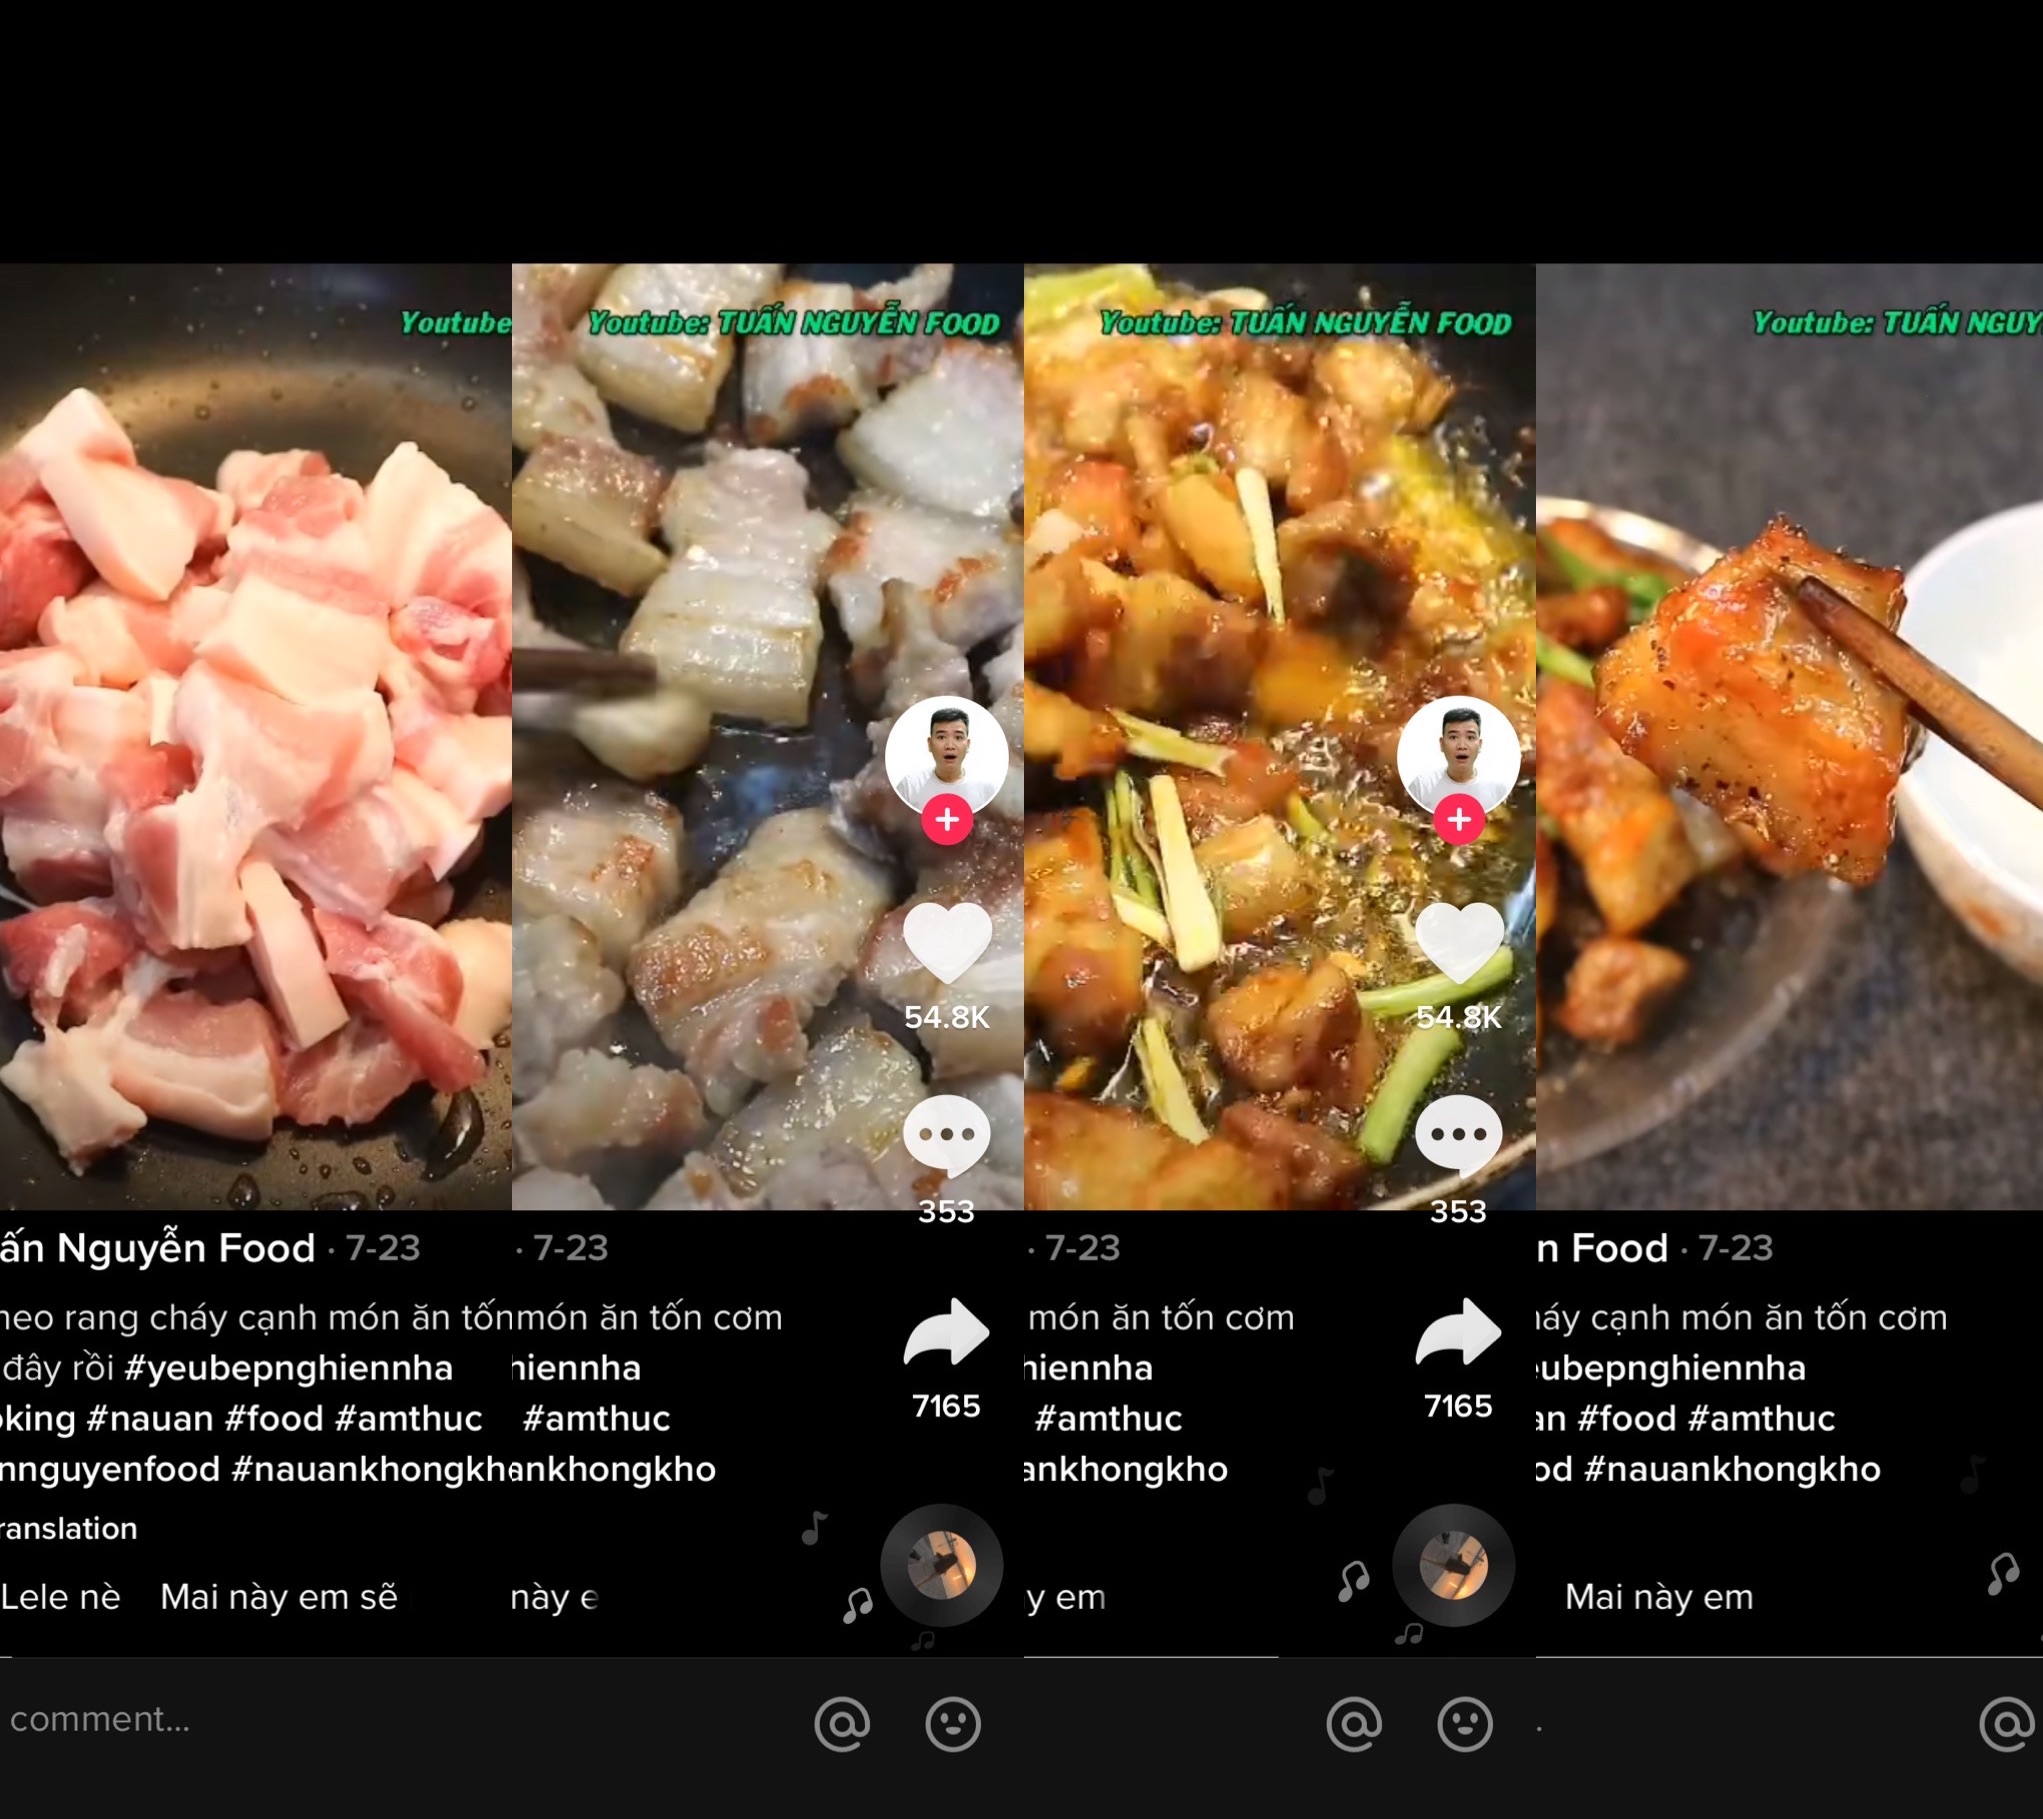 Cooking up viral videos: TikTok is social media’s hottest new recipe platform